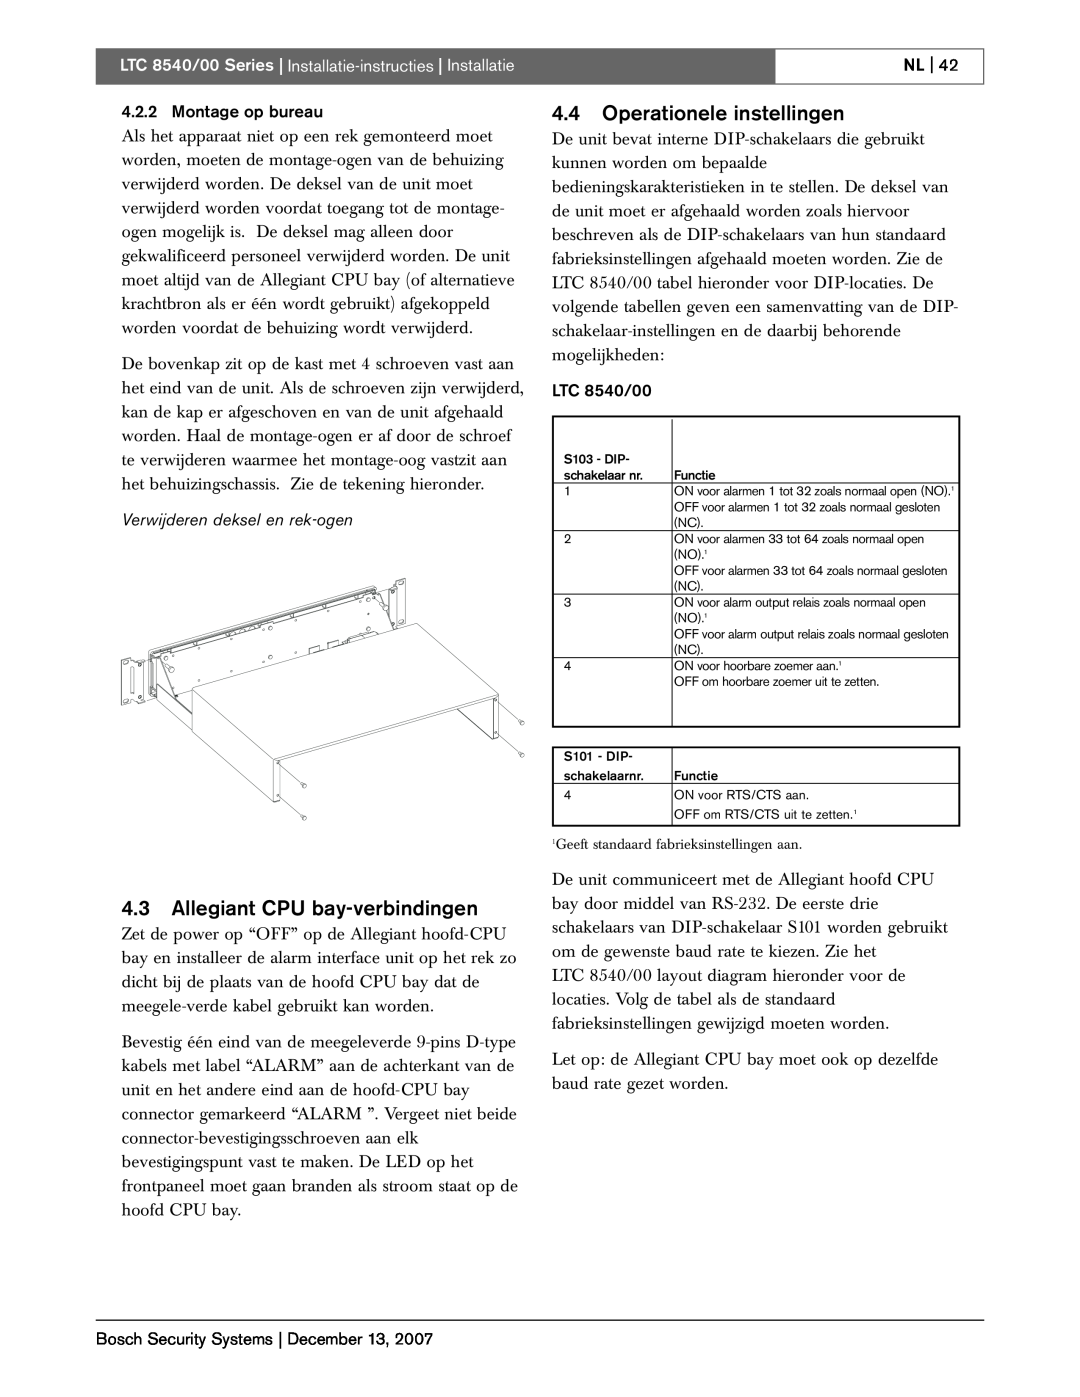 Bosch Appliances LTC 8540/00 instruction manual 4.4Operationele instellingen, 4.3Allegiant CPU bay-verbindingen, Nl 